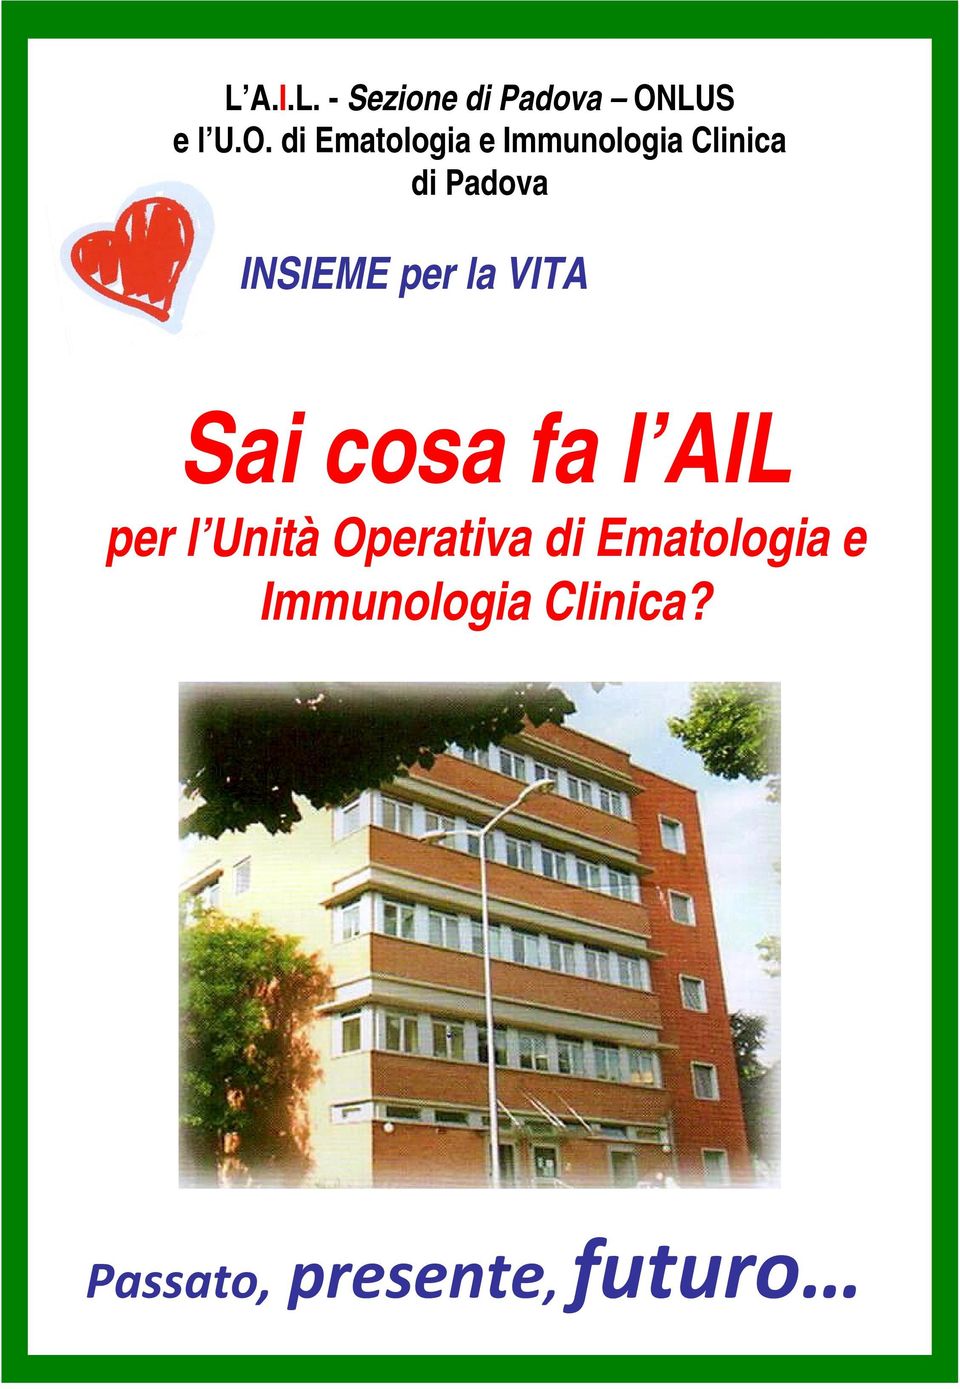 di Ematologia e Immunologia Clinica di Padova